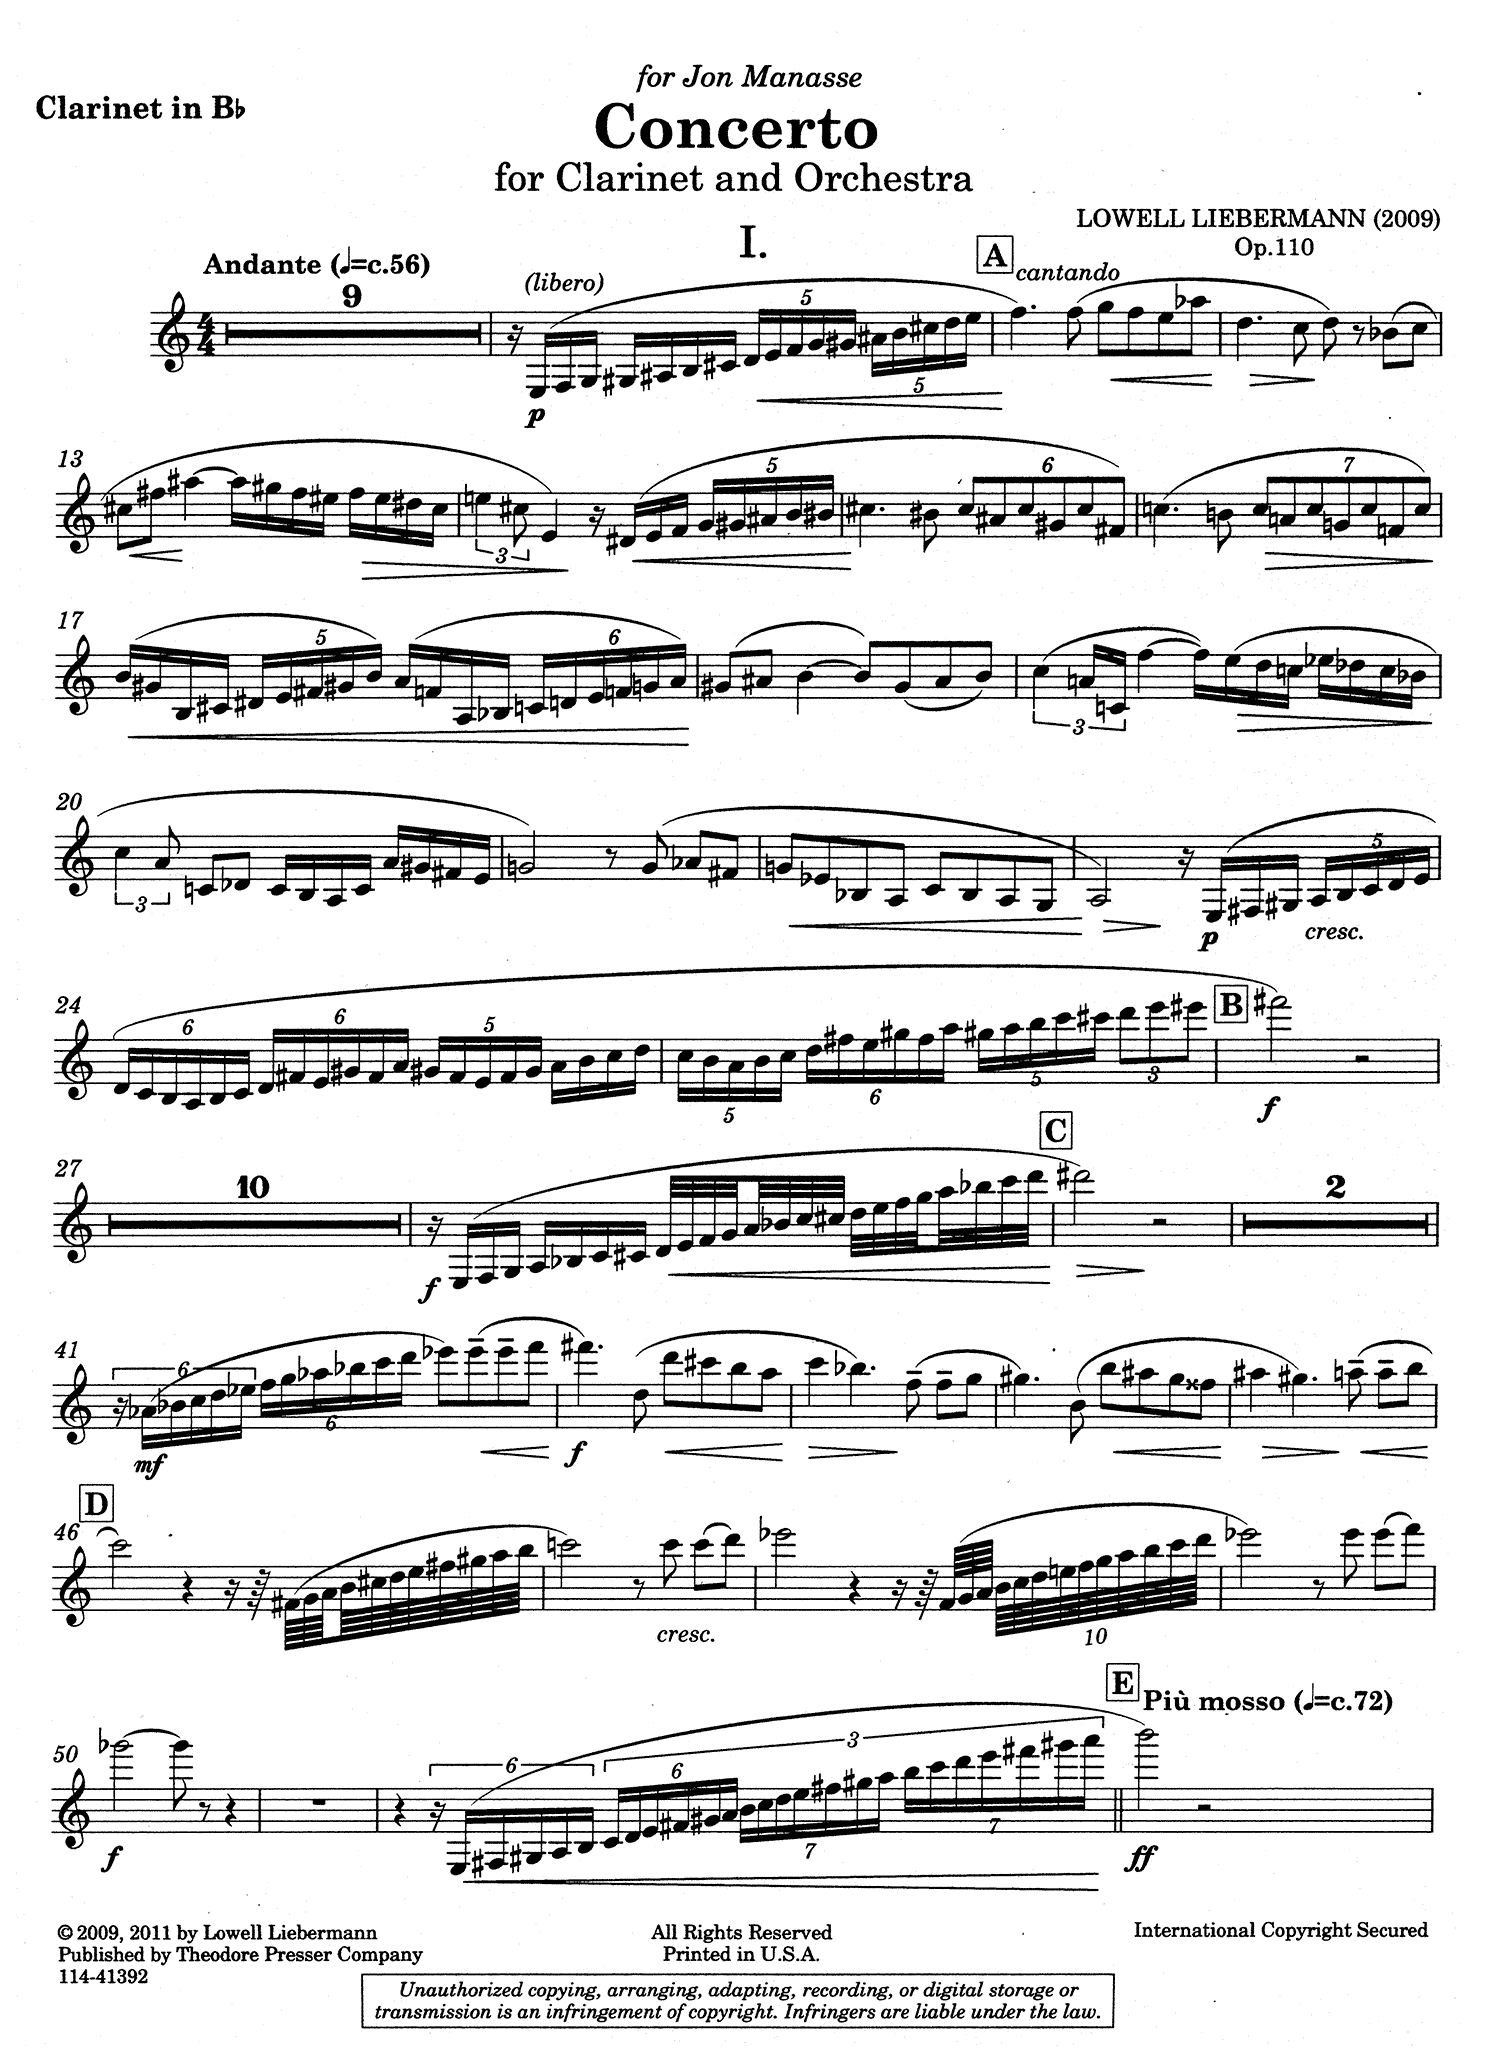 Clarinet Concerto, Op. 110 Clarinet part